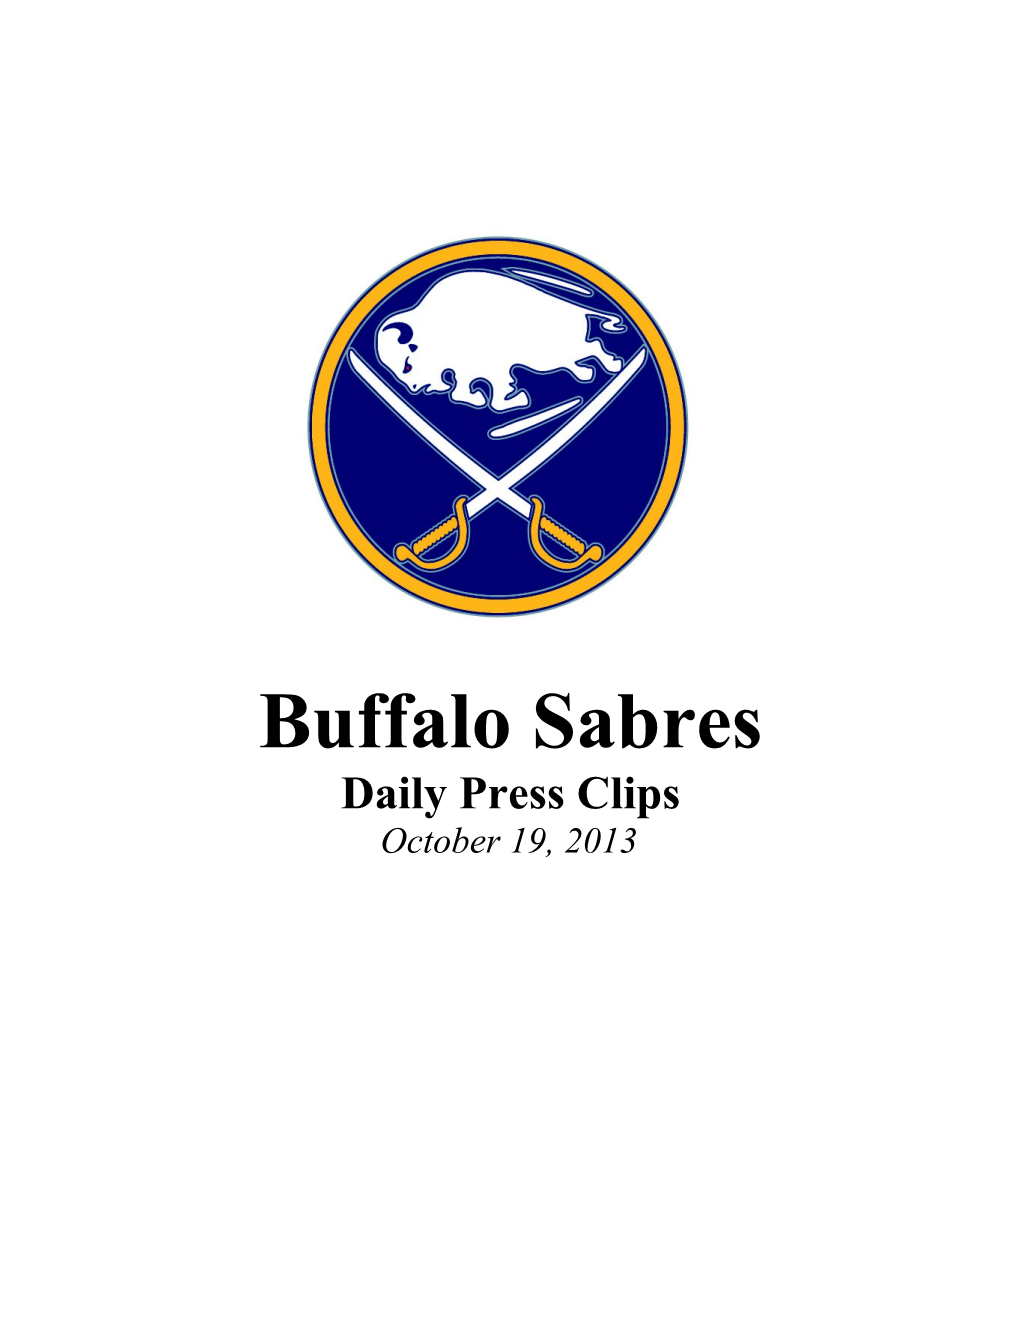 Press Clips October 19, 2013 Avalanche-Sabres Preview by Jordan Garretson Associated Press October 18, 2013